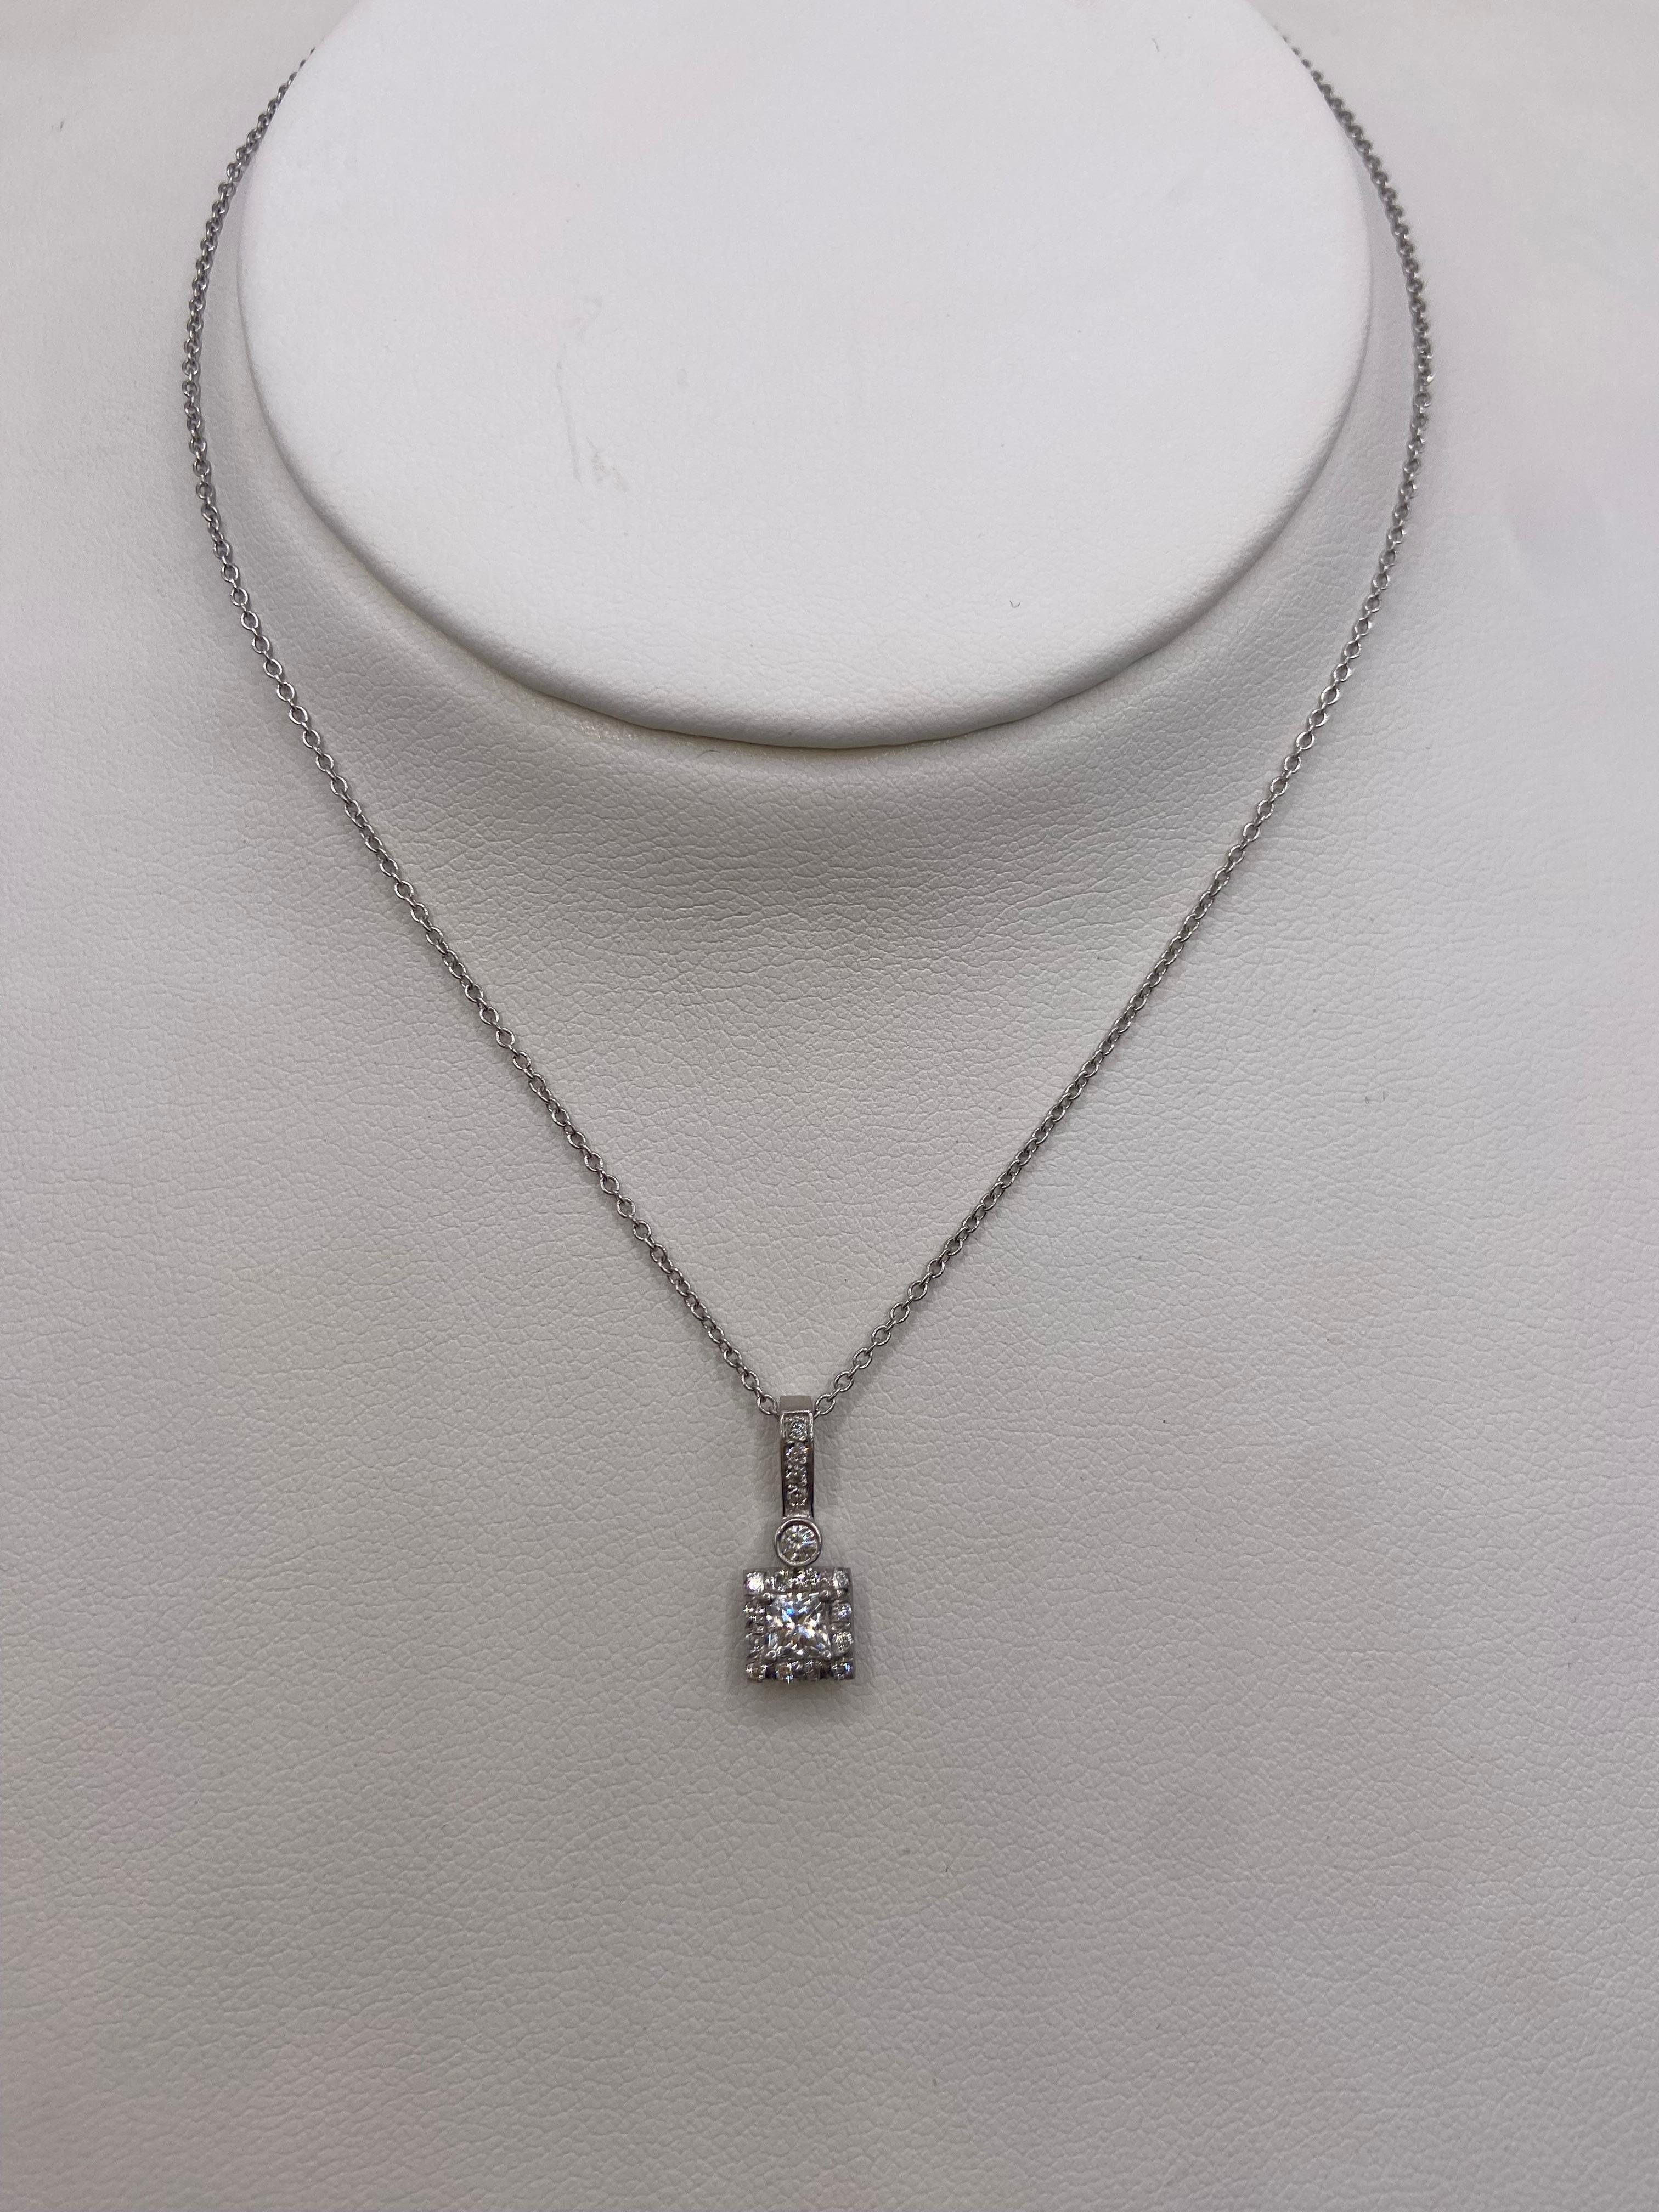 .41ct Princess Cut Diamond pendant in 18KT White Gold For Sale 1